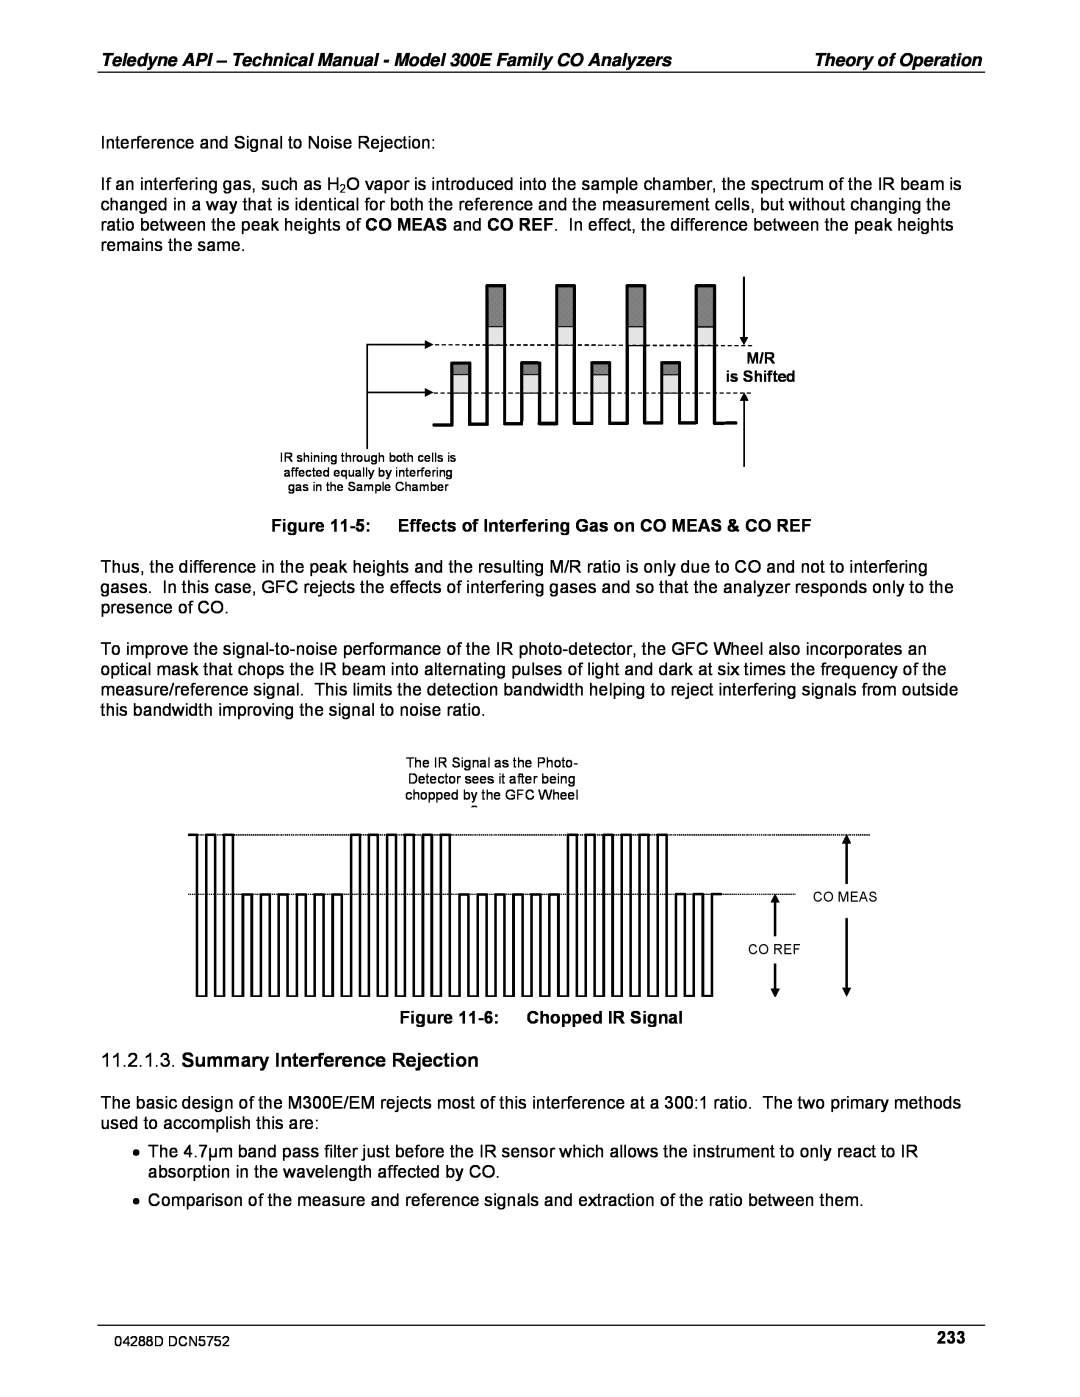 Teledyne M300EM operation manual Summary Interference Rejection, 6:Chopped IR Signal 